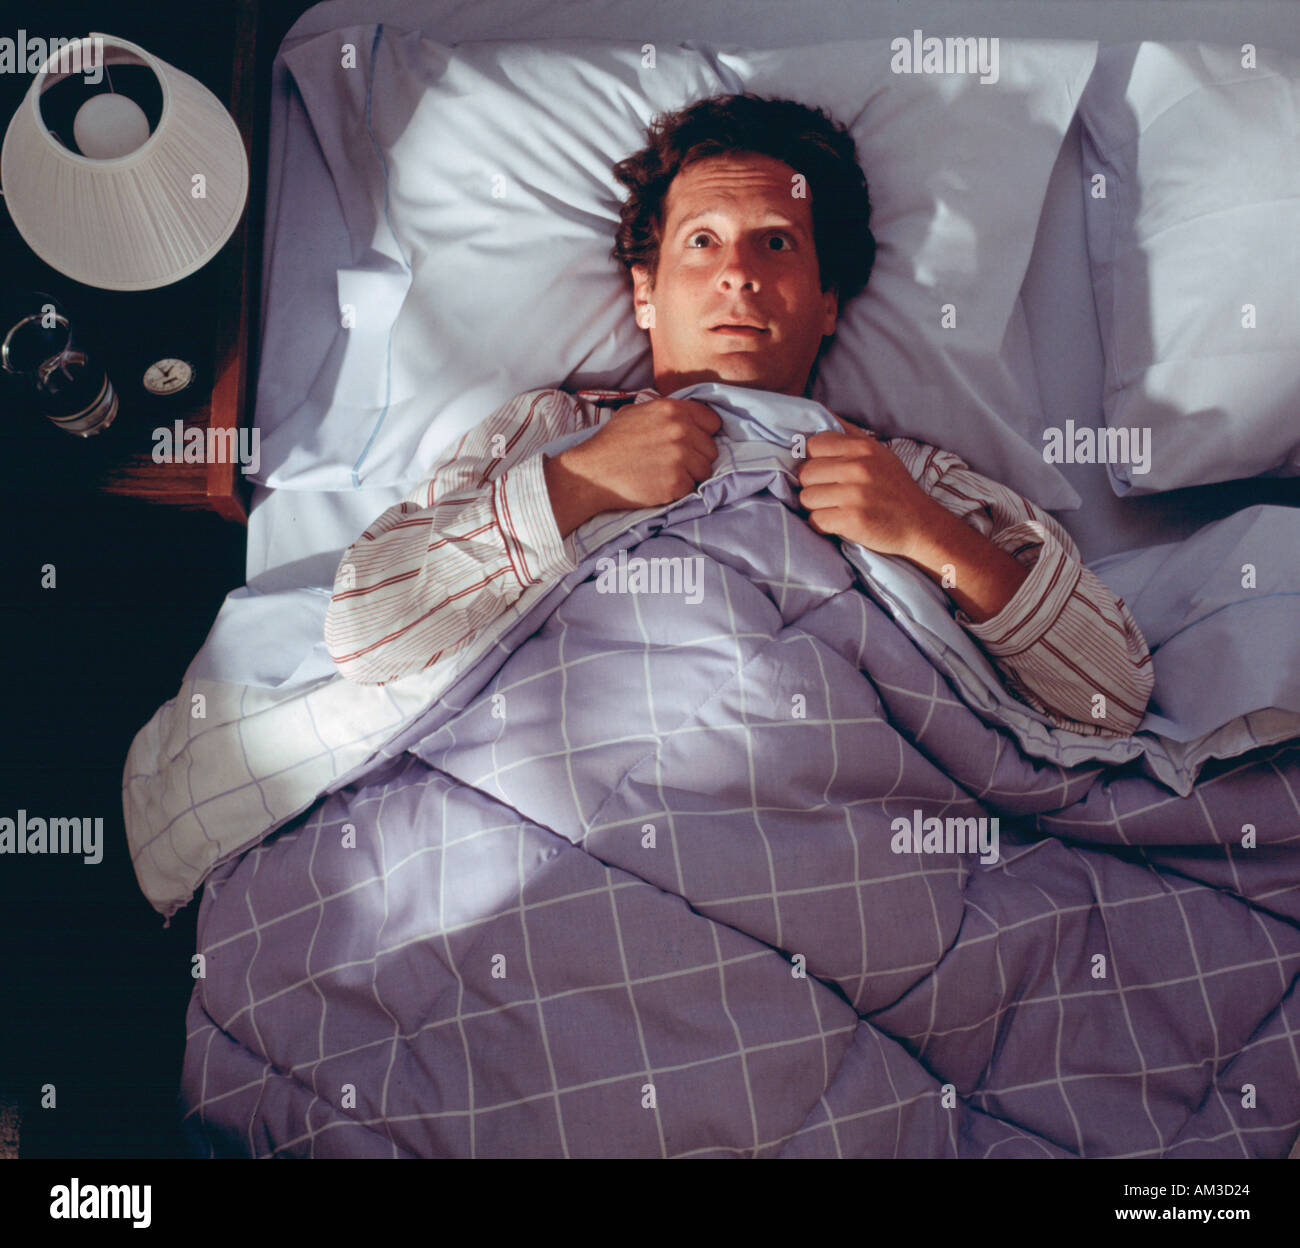 man awake in bed not sleeping, worried insomniac Stock Photo